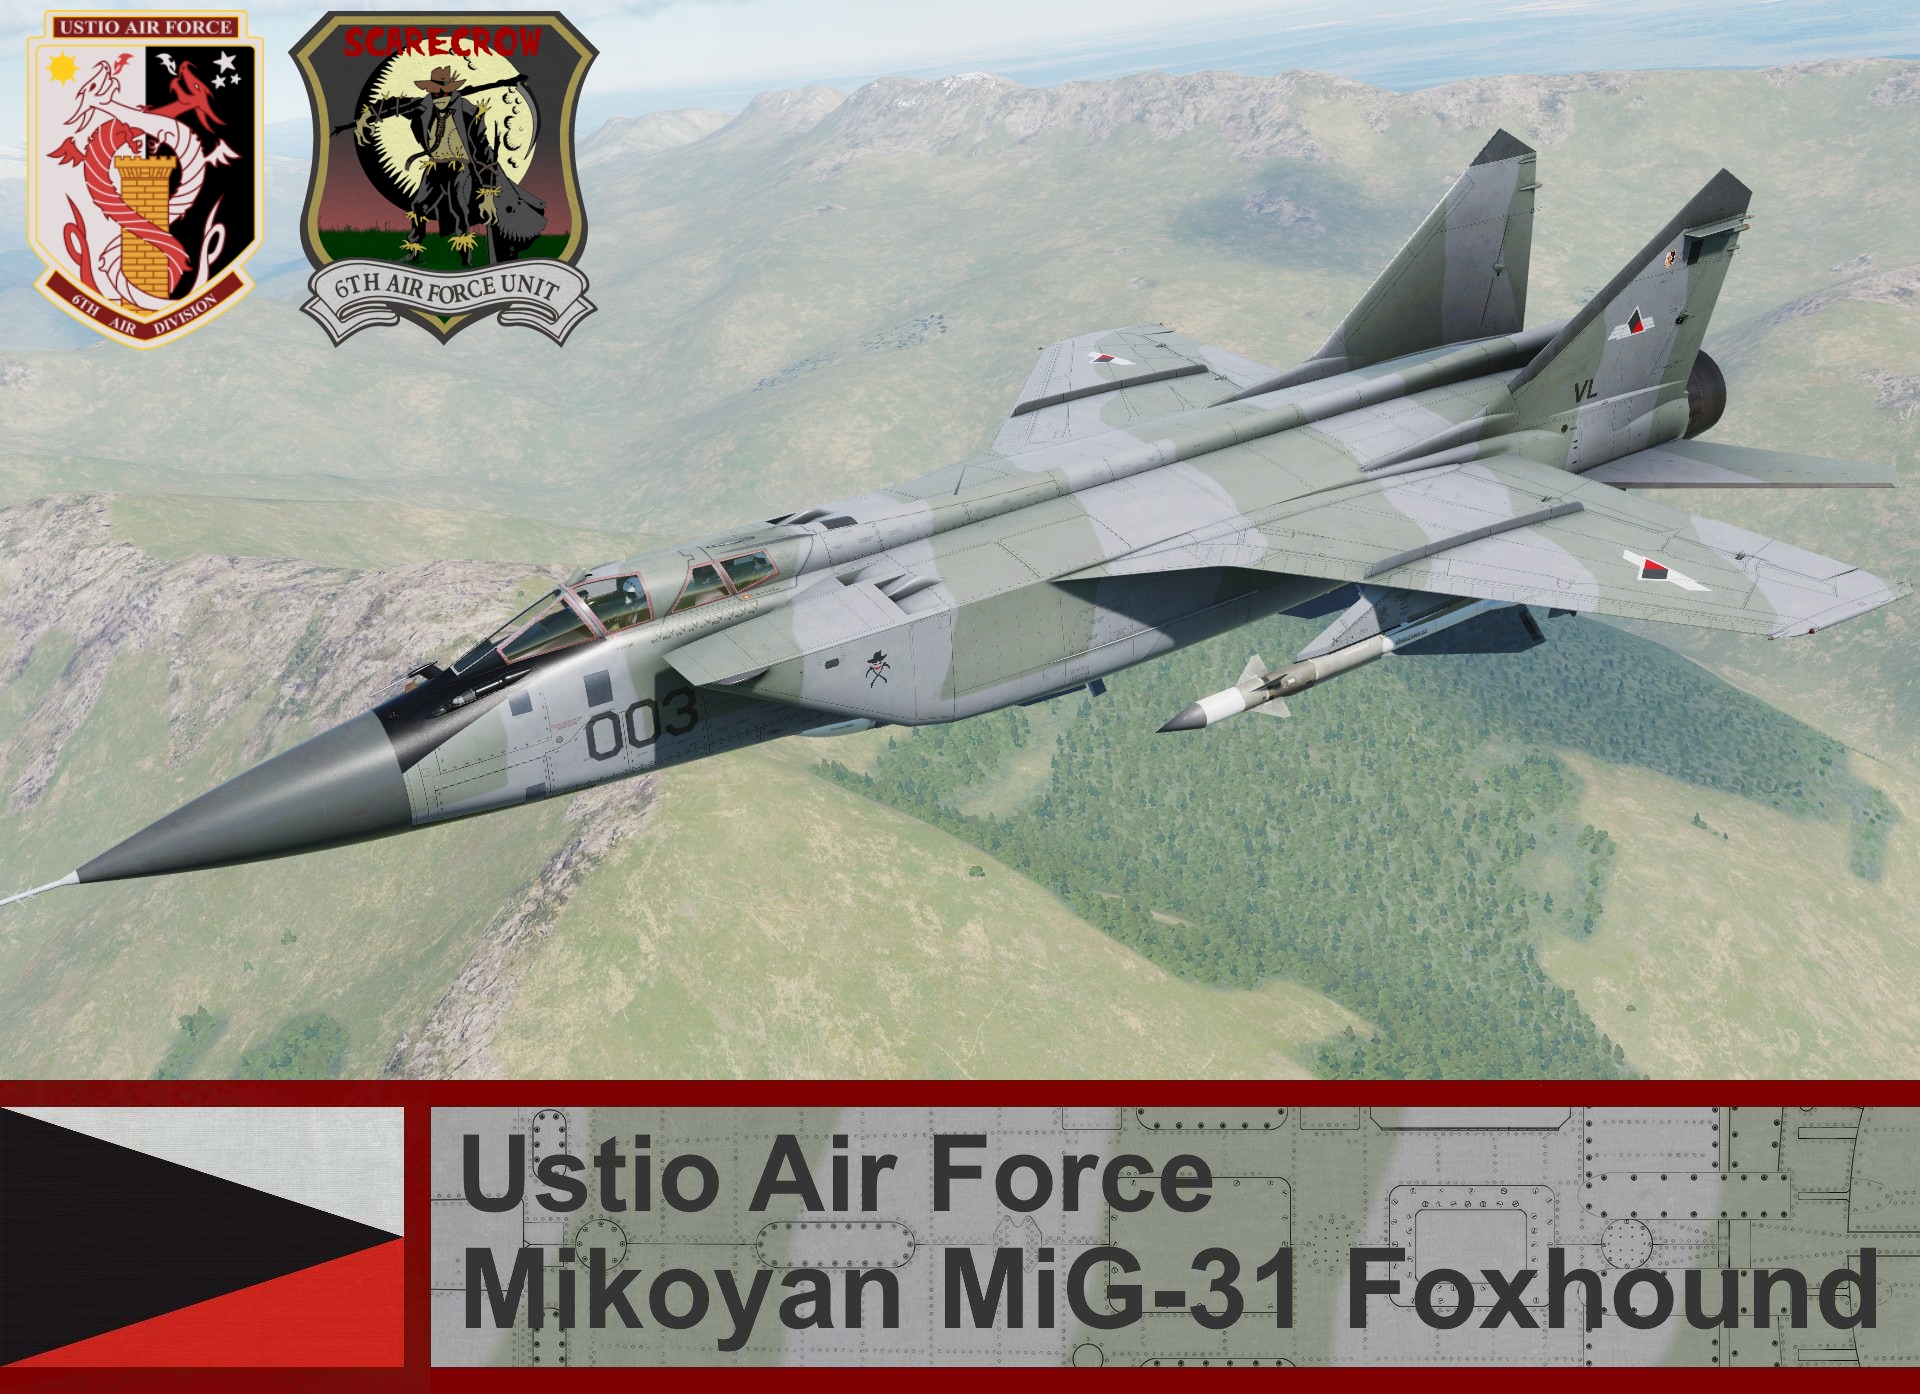 Ustio Air Force Mig 31 Foxhound Ace Combat Zero 6th Afu